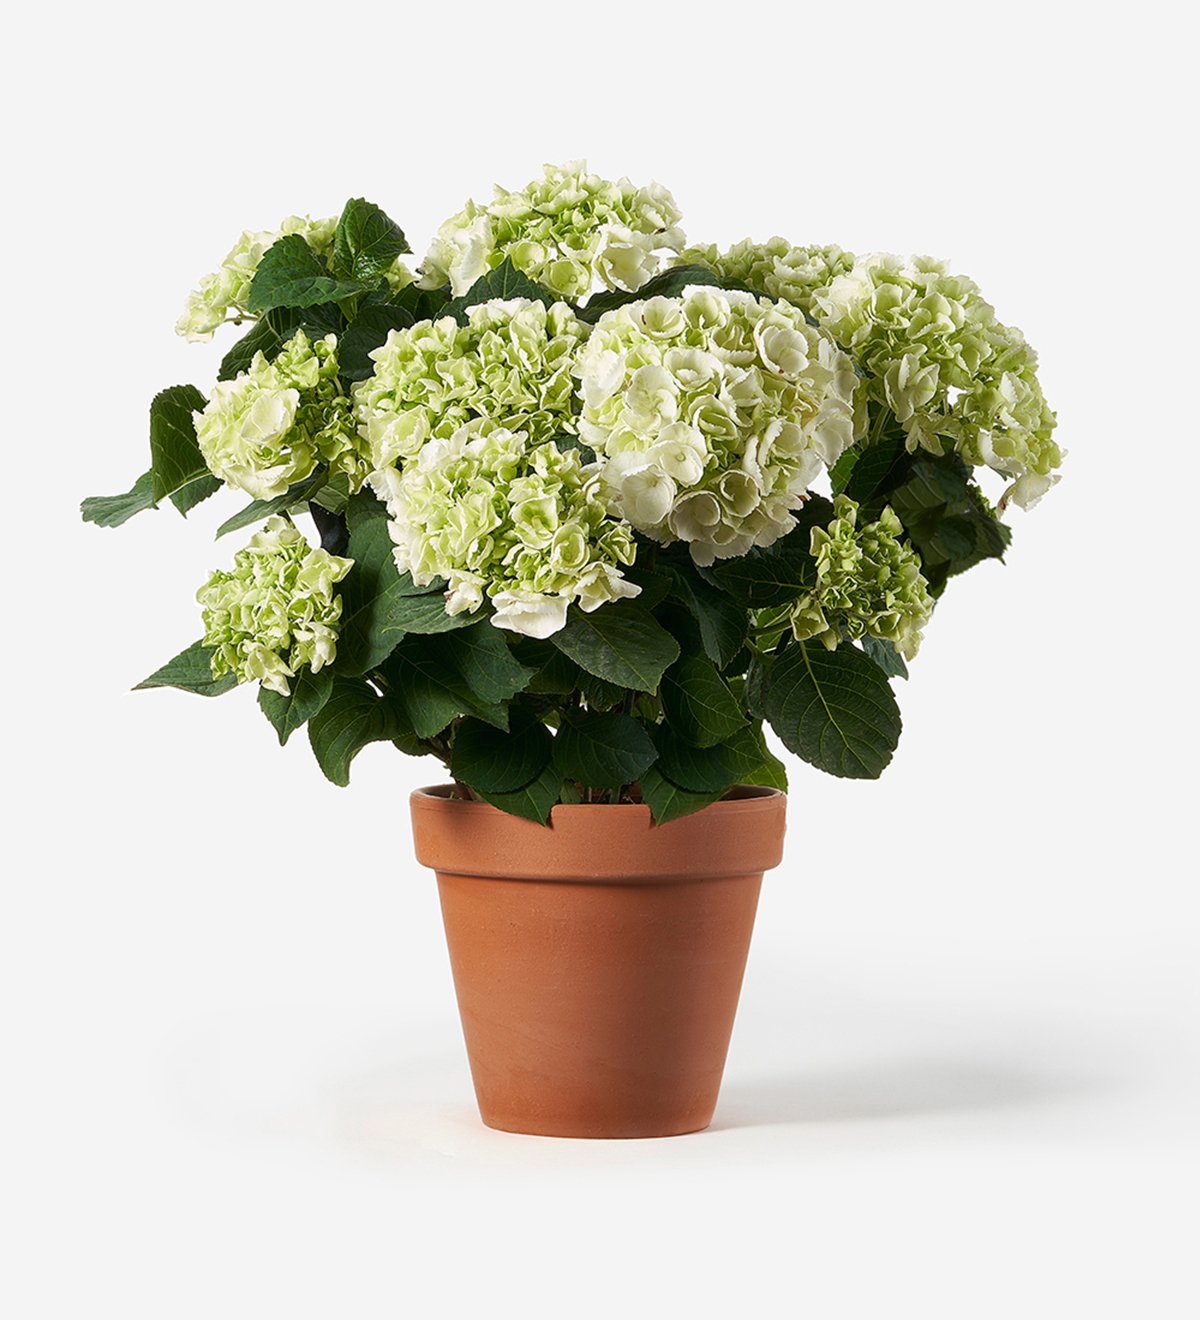 Image of Cheap white hydrangea plant in a pot